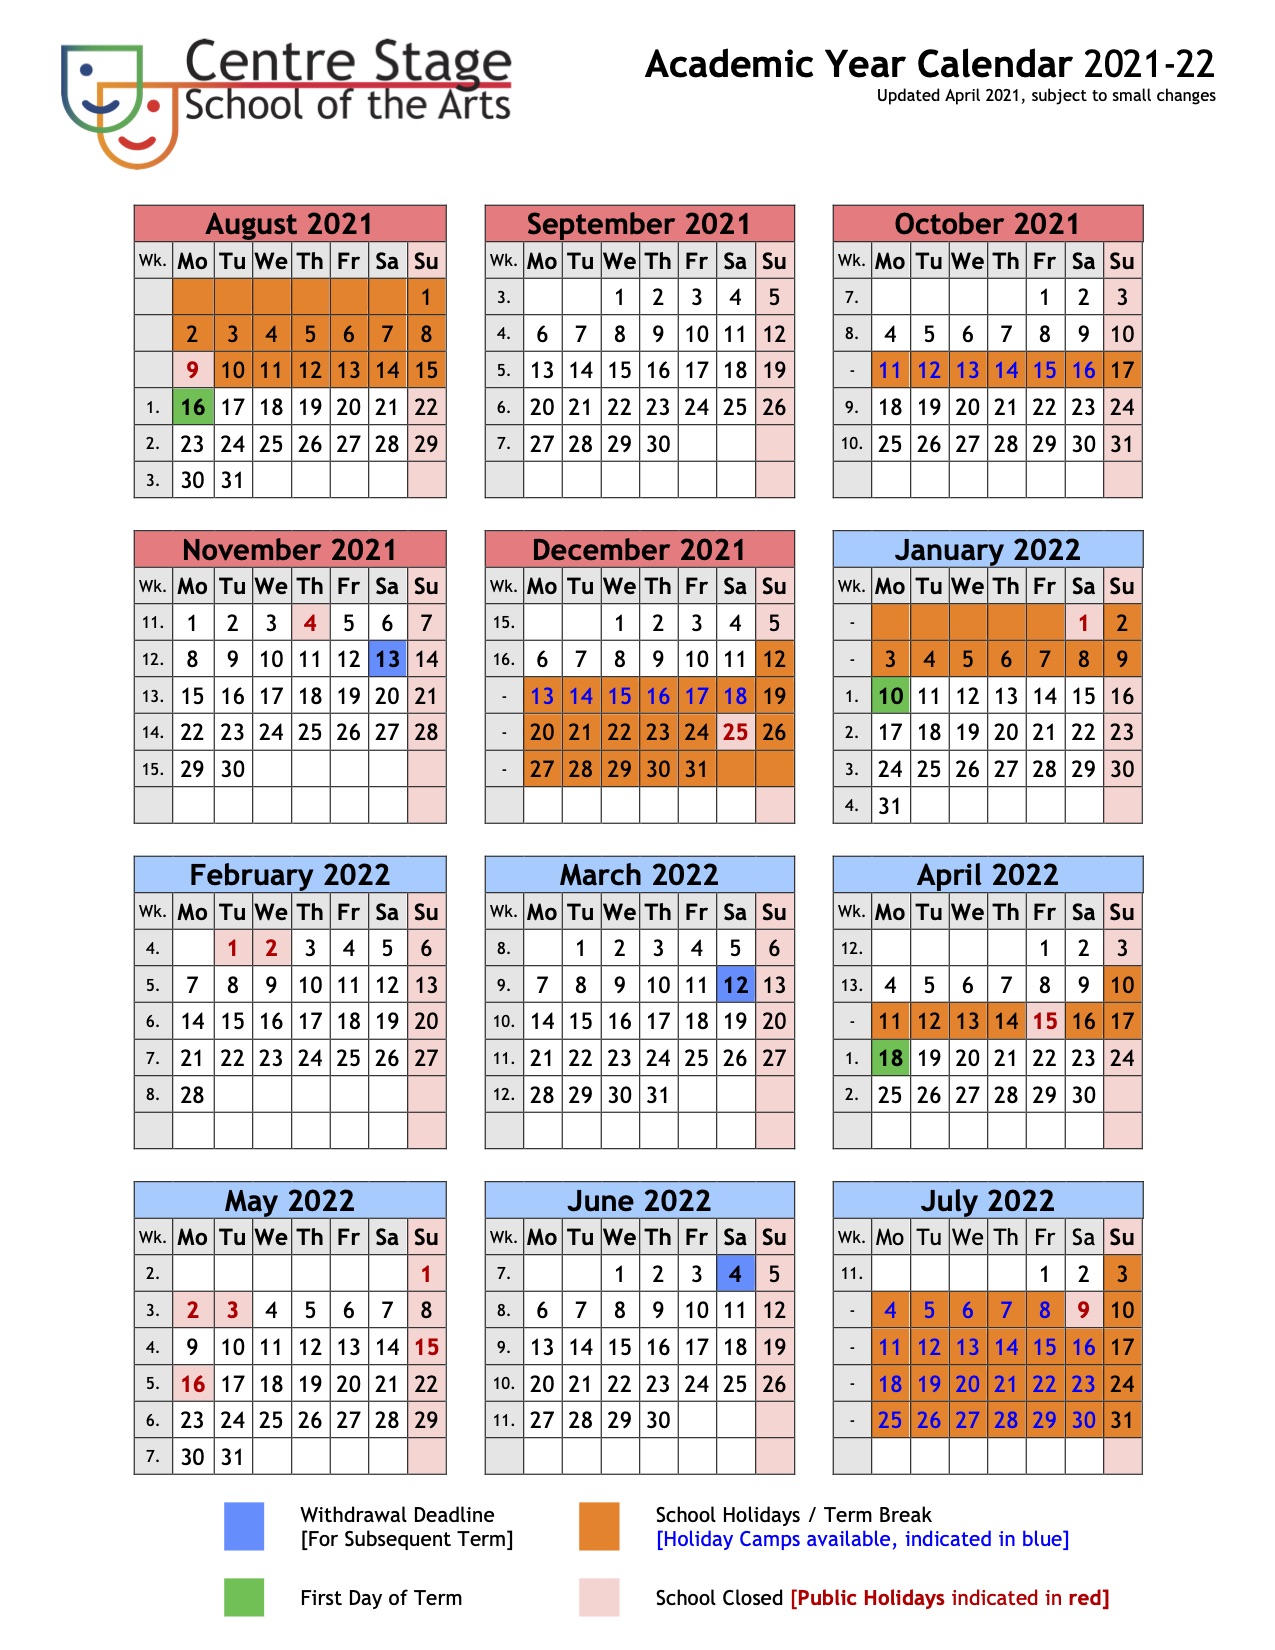 Centre College Academic Calendar 2022 Term 2 Runs 10 January To 10 April 2022 - Centre Stage